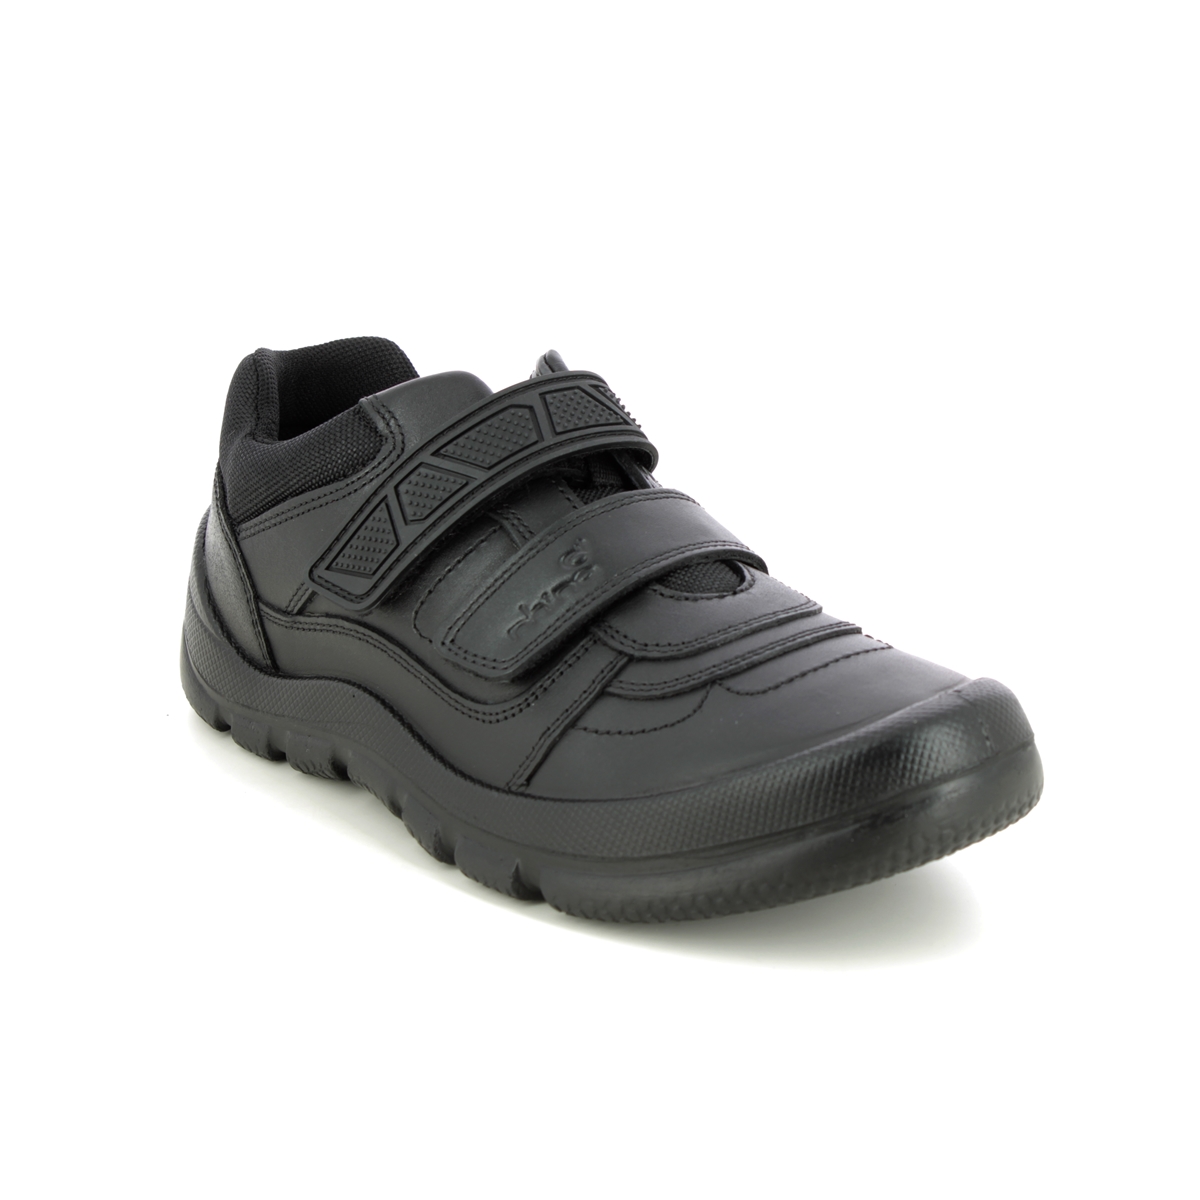 Start Rite - Rhino Warrior In Black Leather 8237-76F In Size 3.5 In Plain Black Leather For School Boys Shoes  In Black Leather For kids